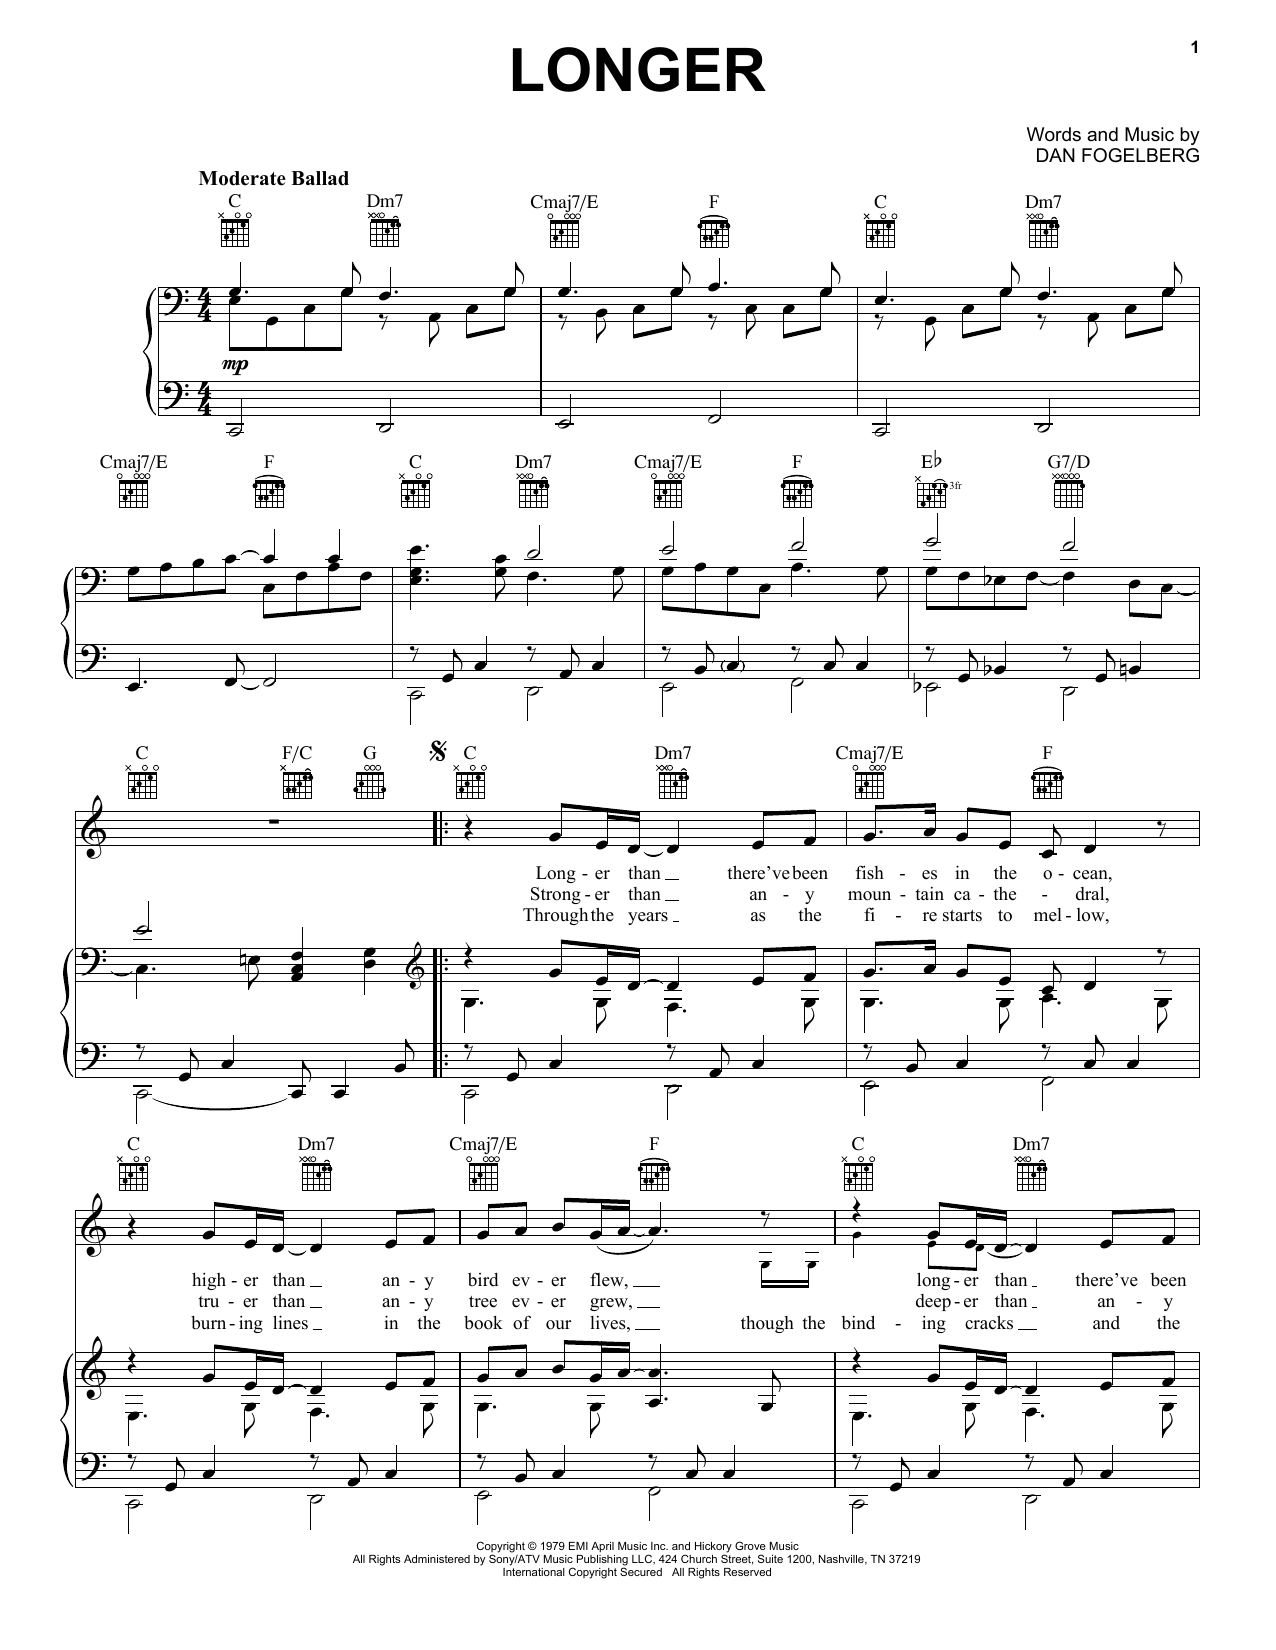 Dan Fogelberg Longer Sheet Music Notes & Chords for Piano Duet - Download or Print PDF